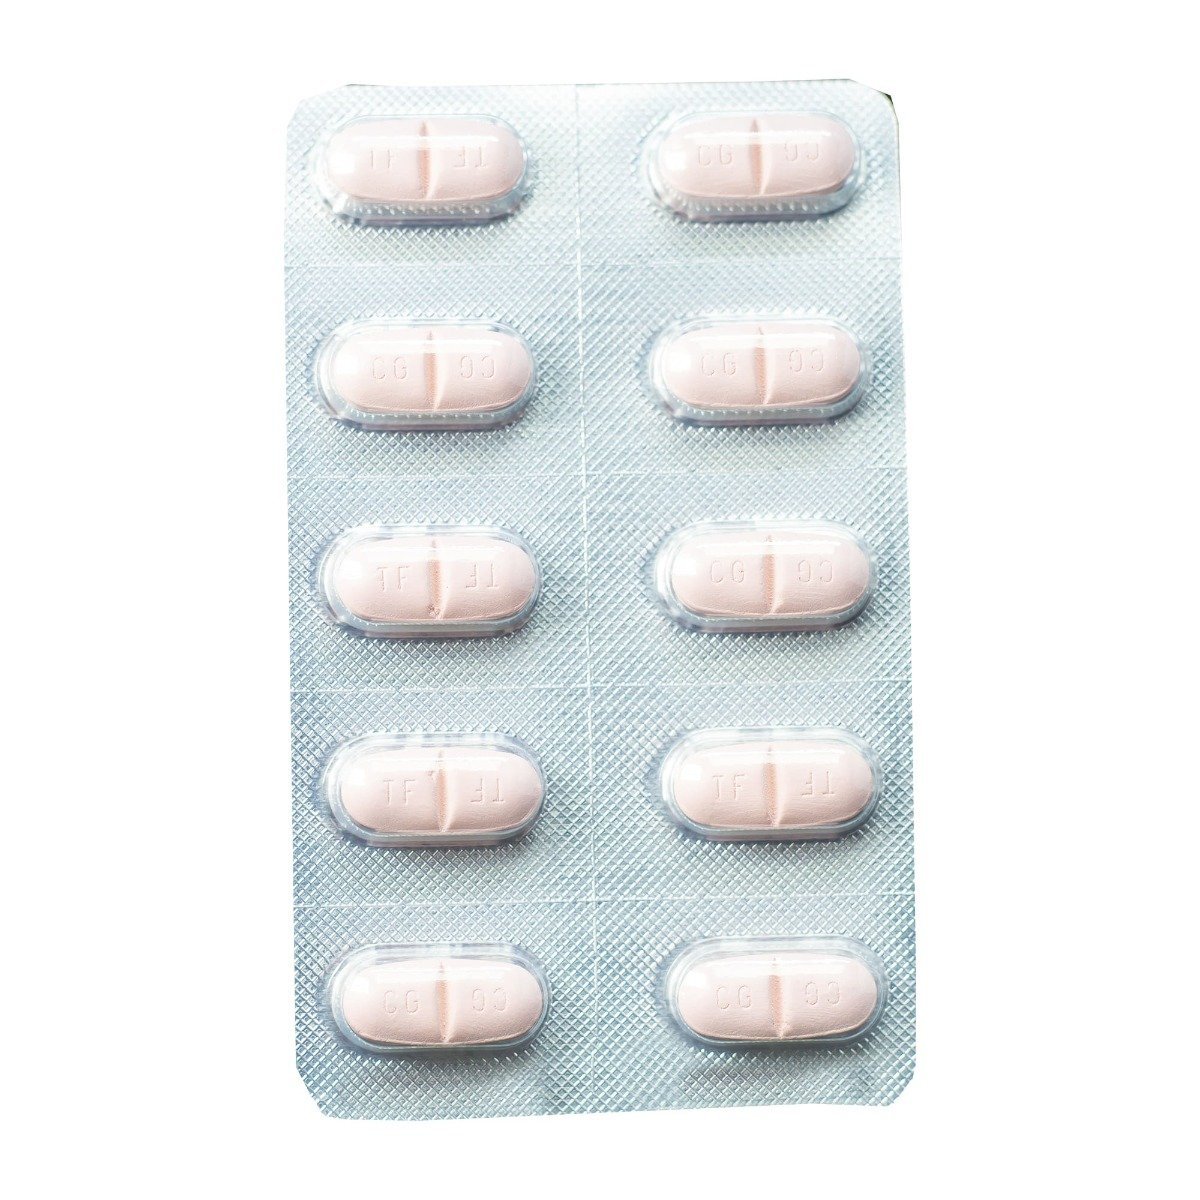 Trileptal 600 mg - 50 Tablets - Bloom Pharmacy